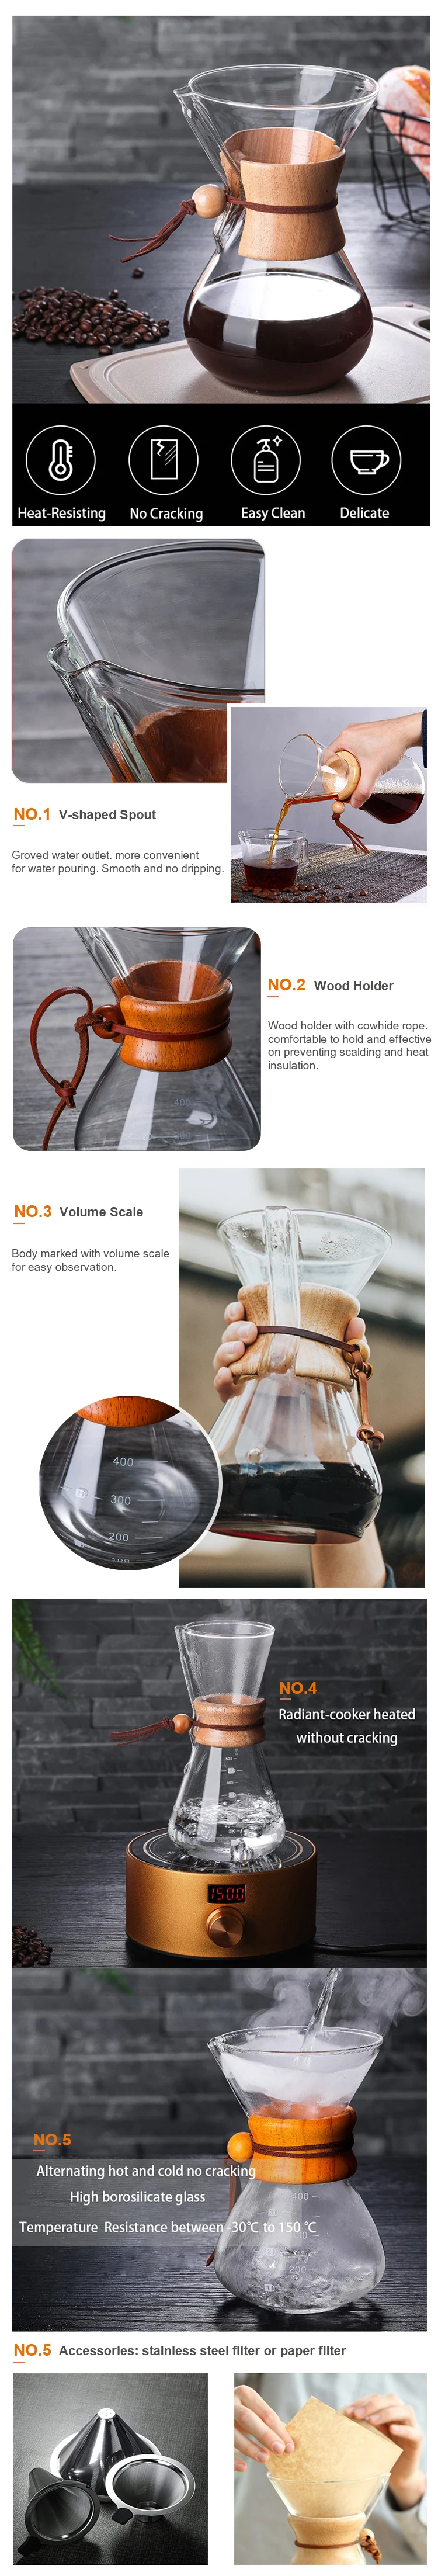 400ml Coffee Pot Heat Resistant Glass Coffee Maker Espresso Coffee Drip Brewing Machine, Clear